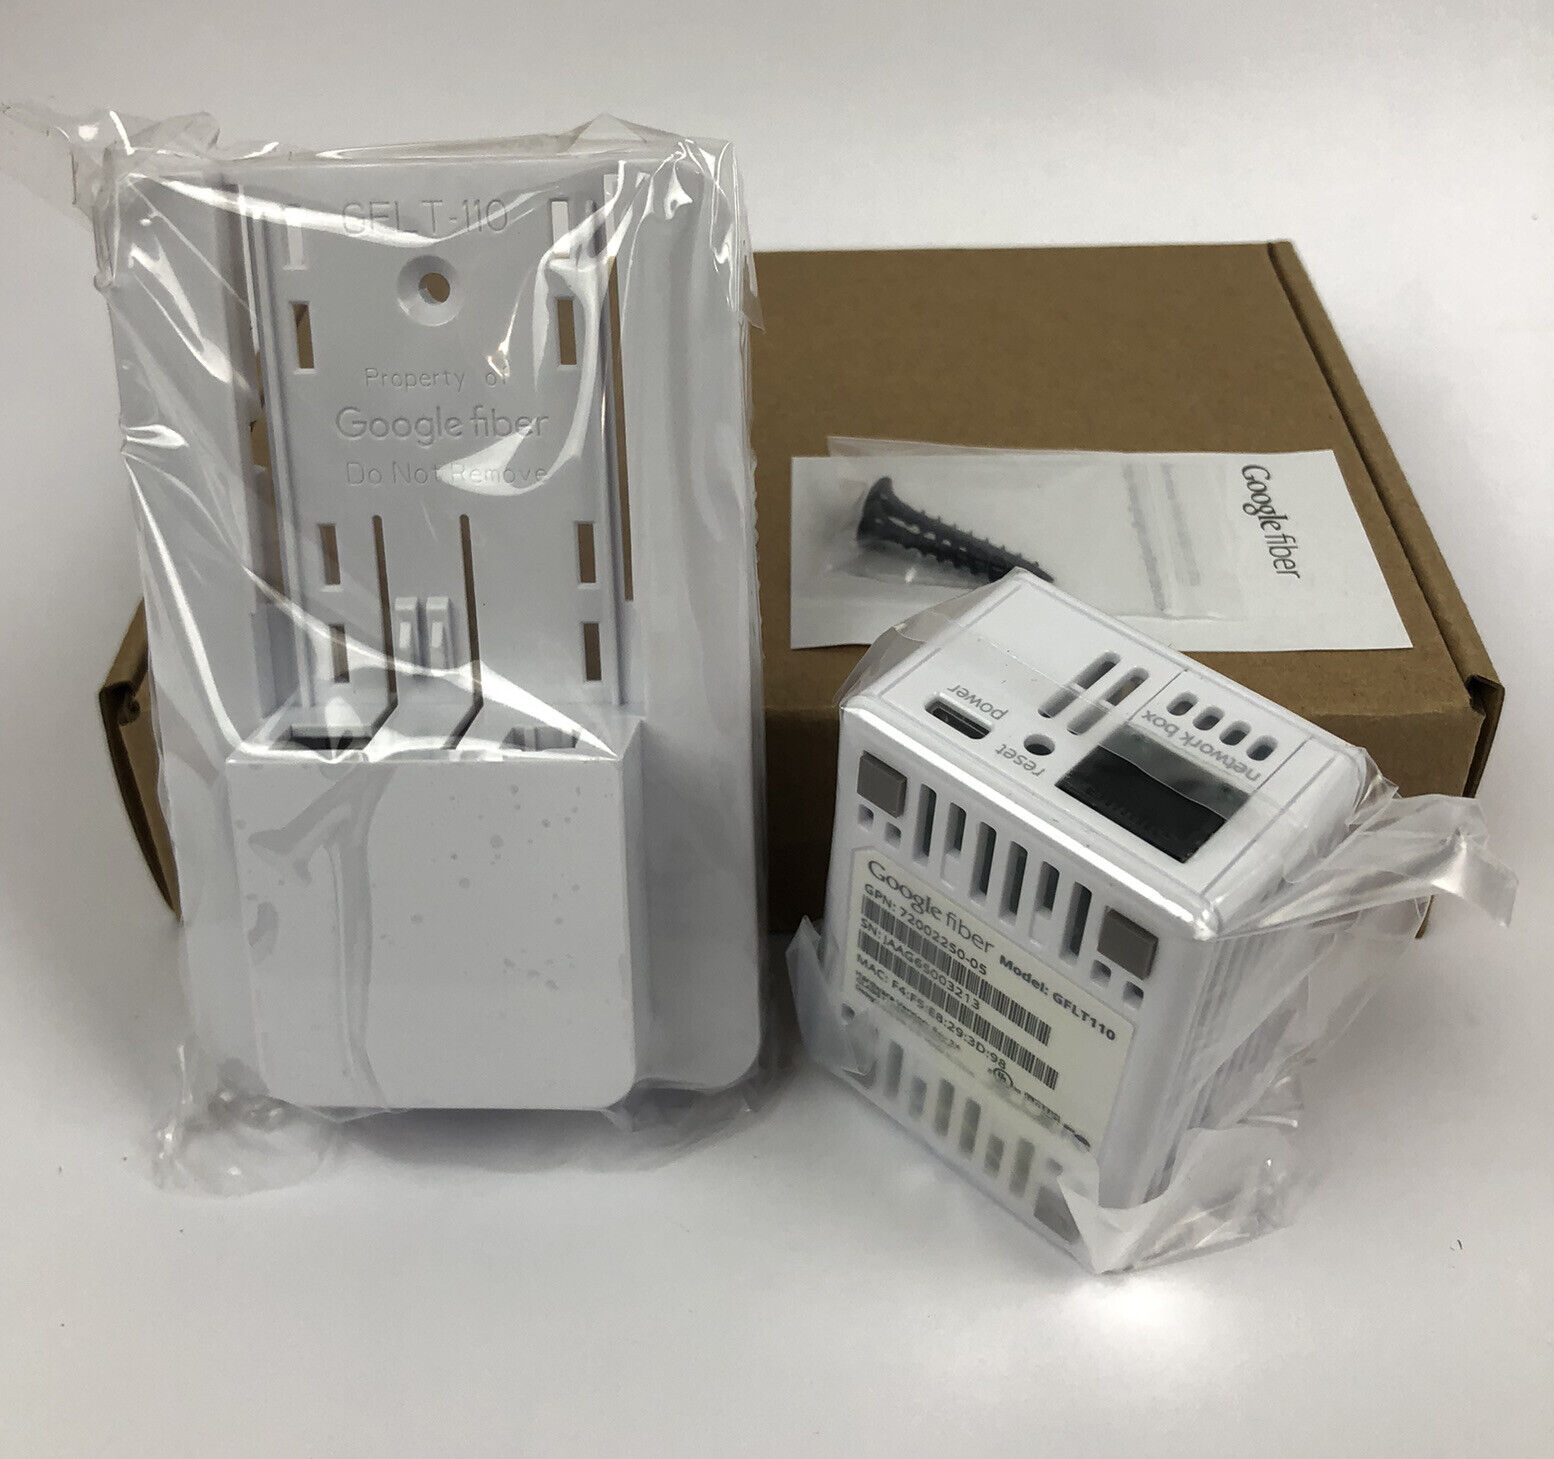 2 Google Fiber Jacks & Base GFLT110 NEW IN BOX SEALED From Manufacturer Google Fiber 86003010-07 - фотография #7